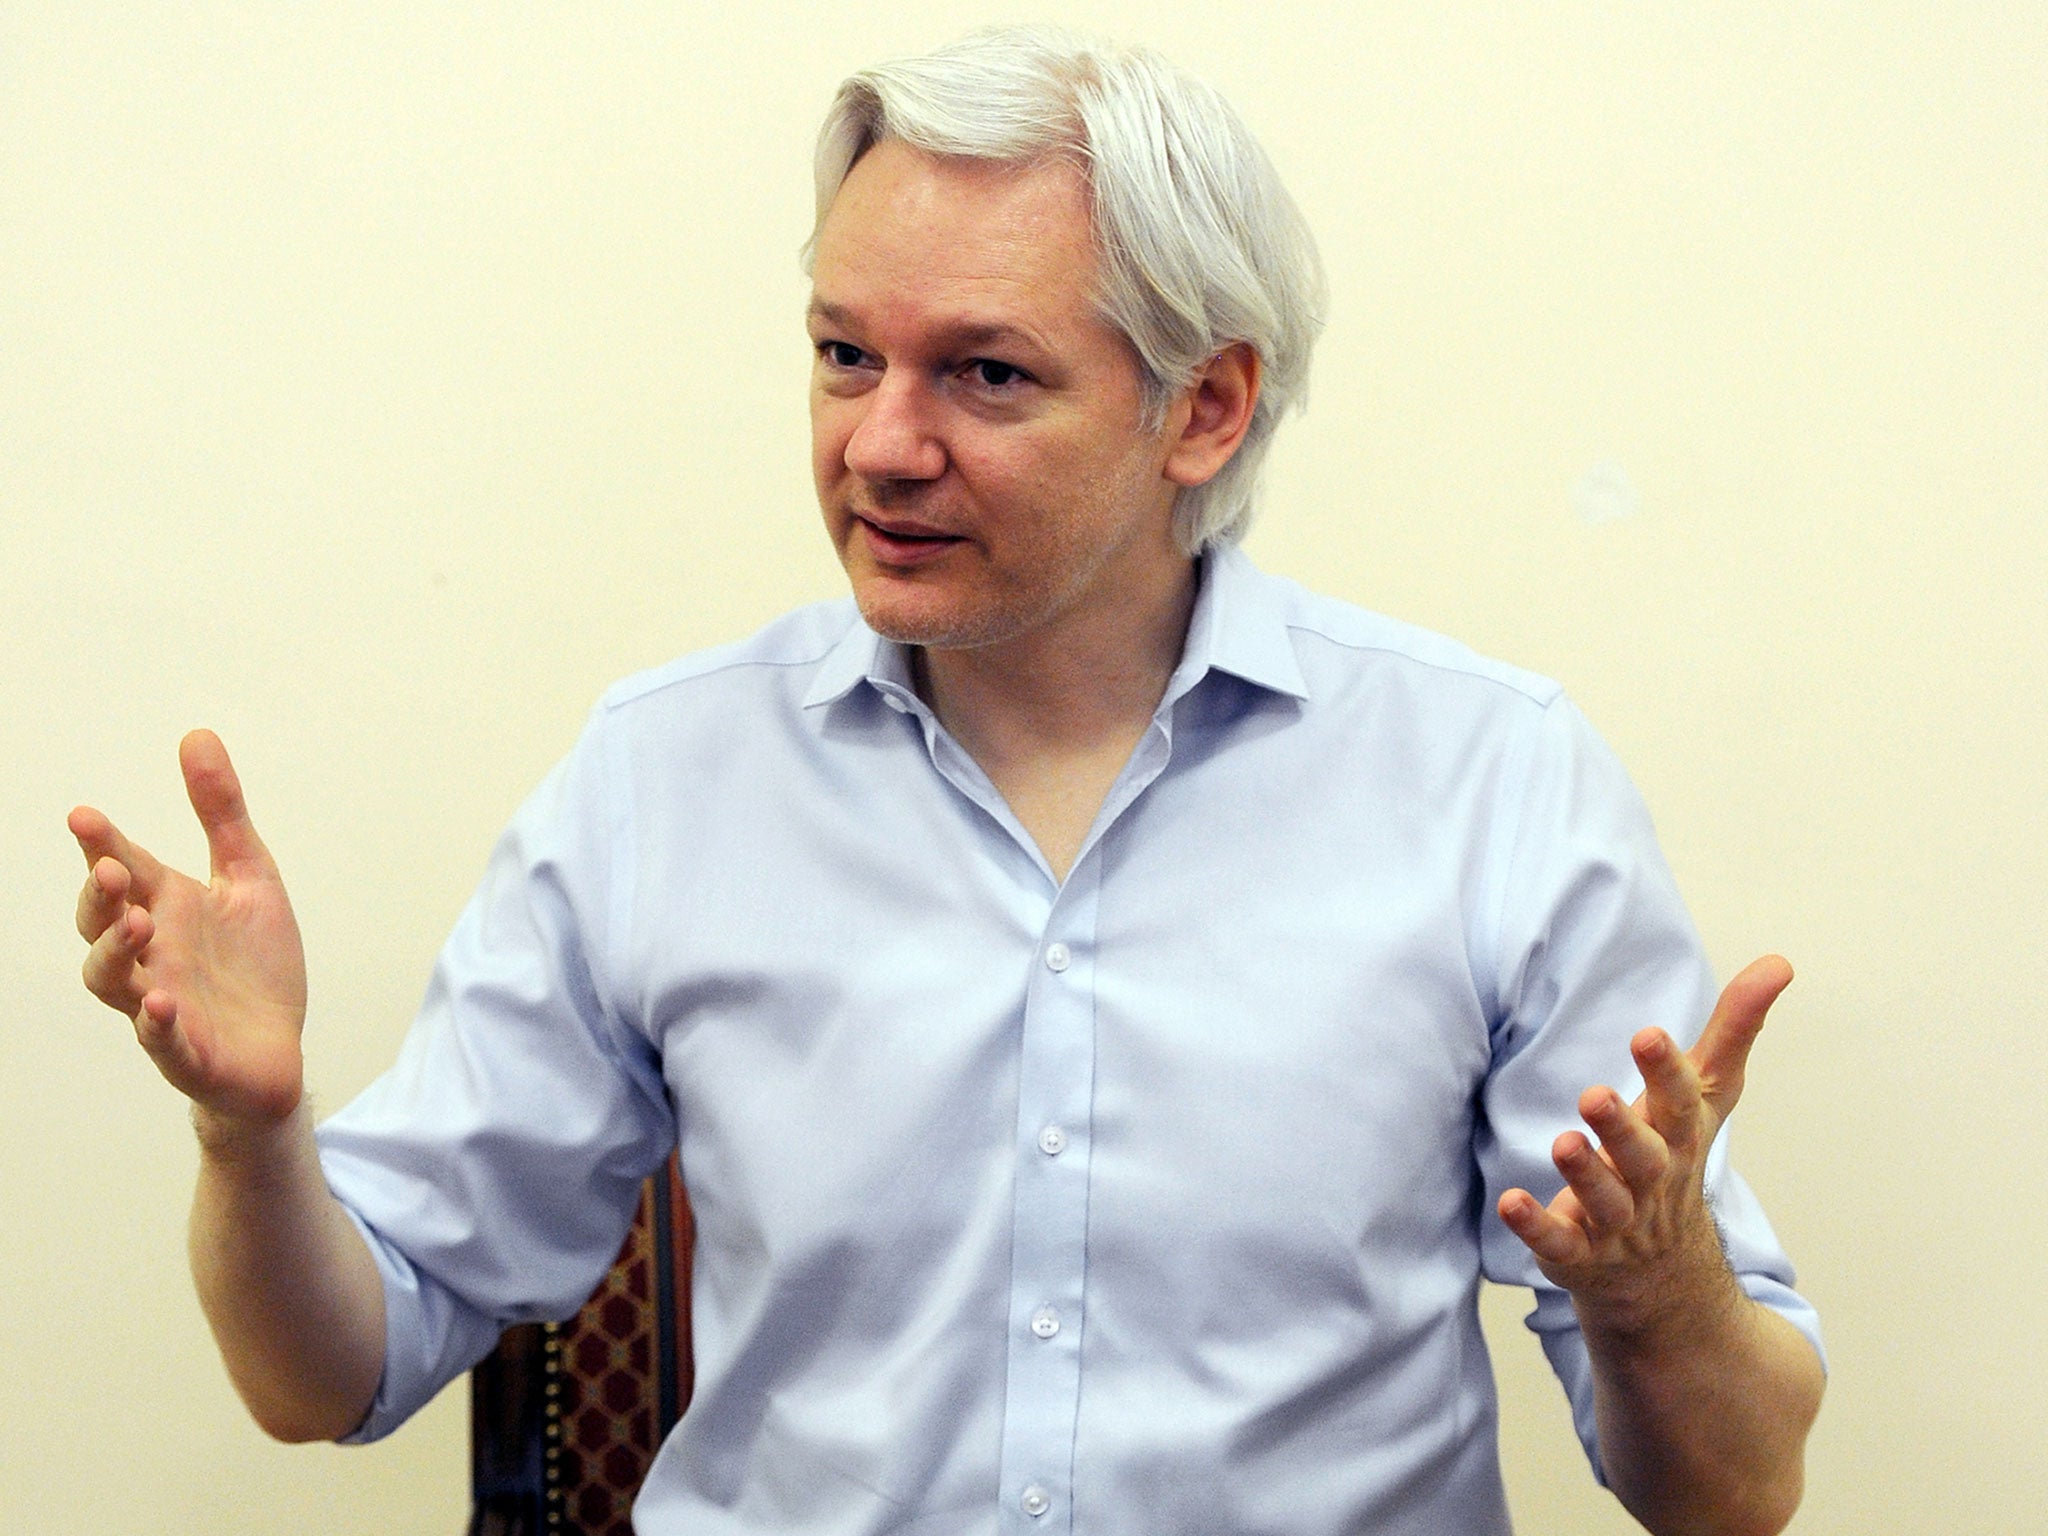 Wikileaks founder Julian Assange has been based at the Ecuadorian Embassy in London since June 2012